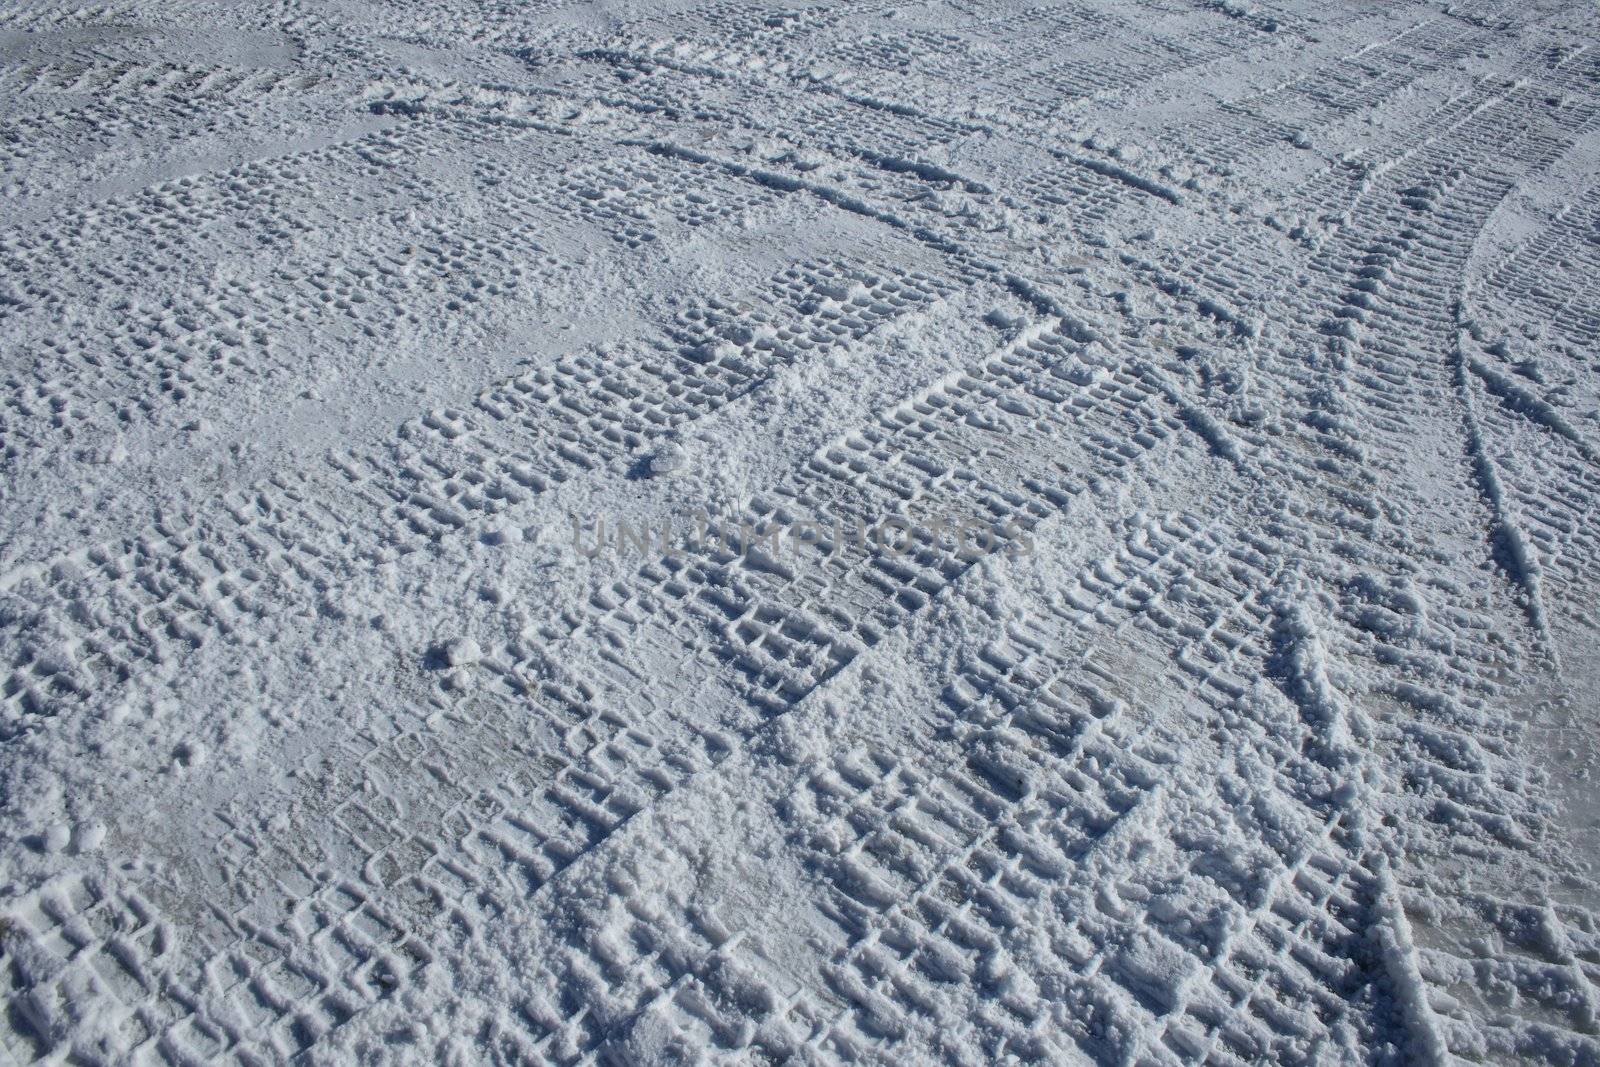 Vehicle tracks crossing the snowy terrain by anikasalsera